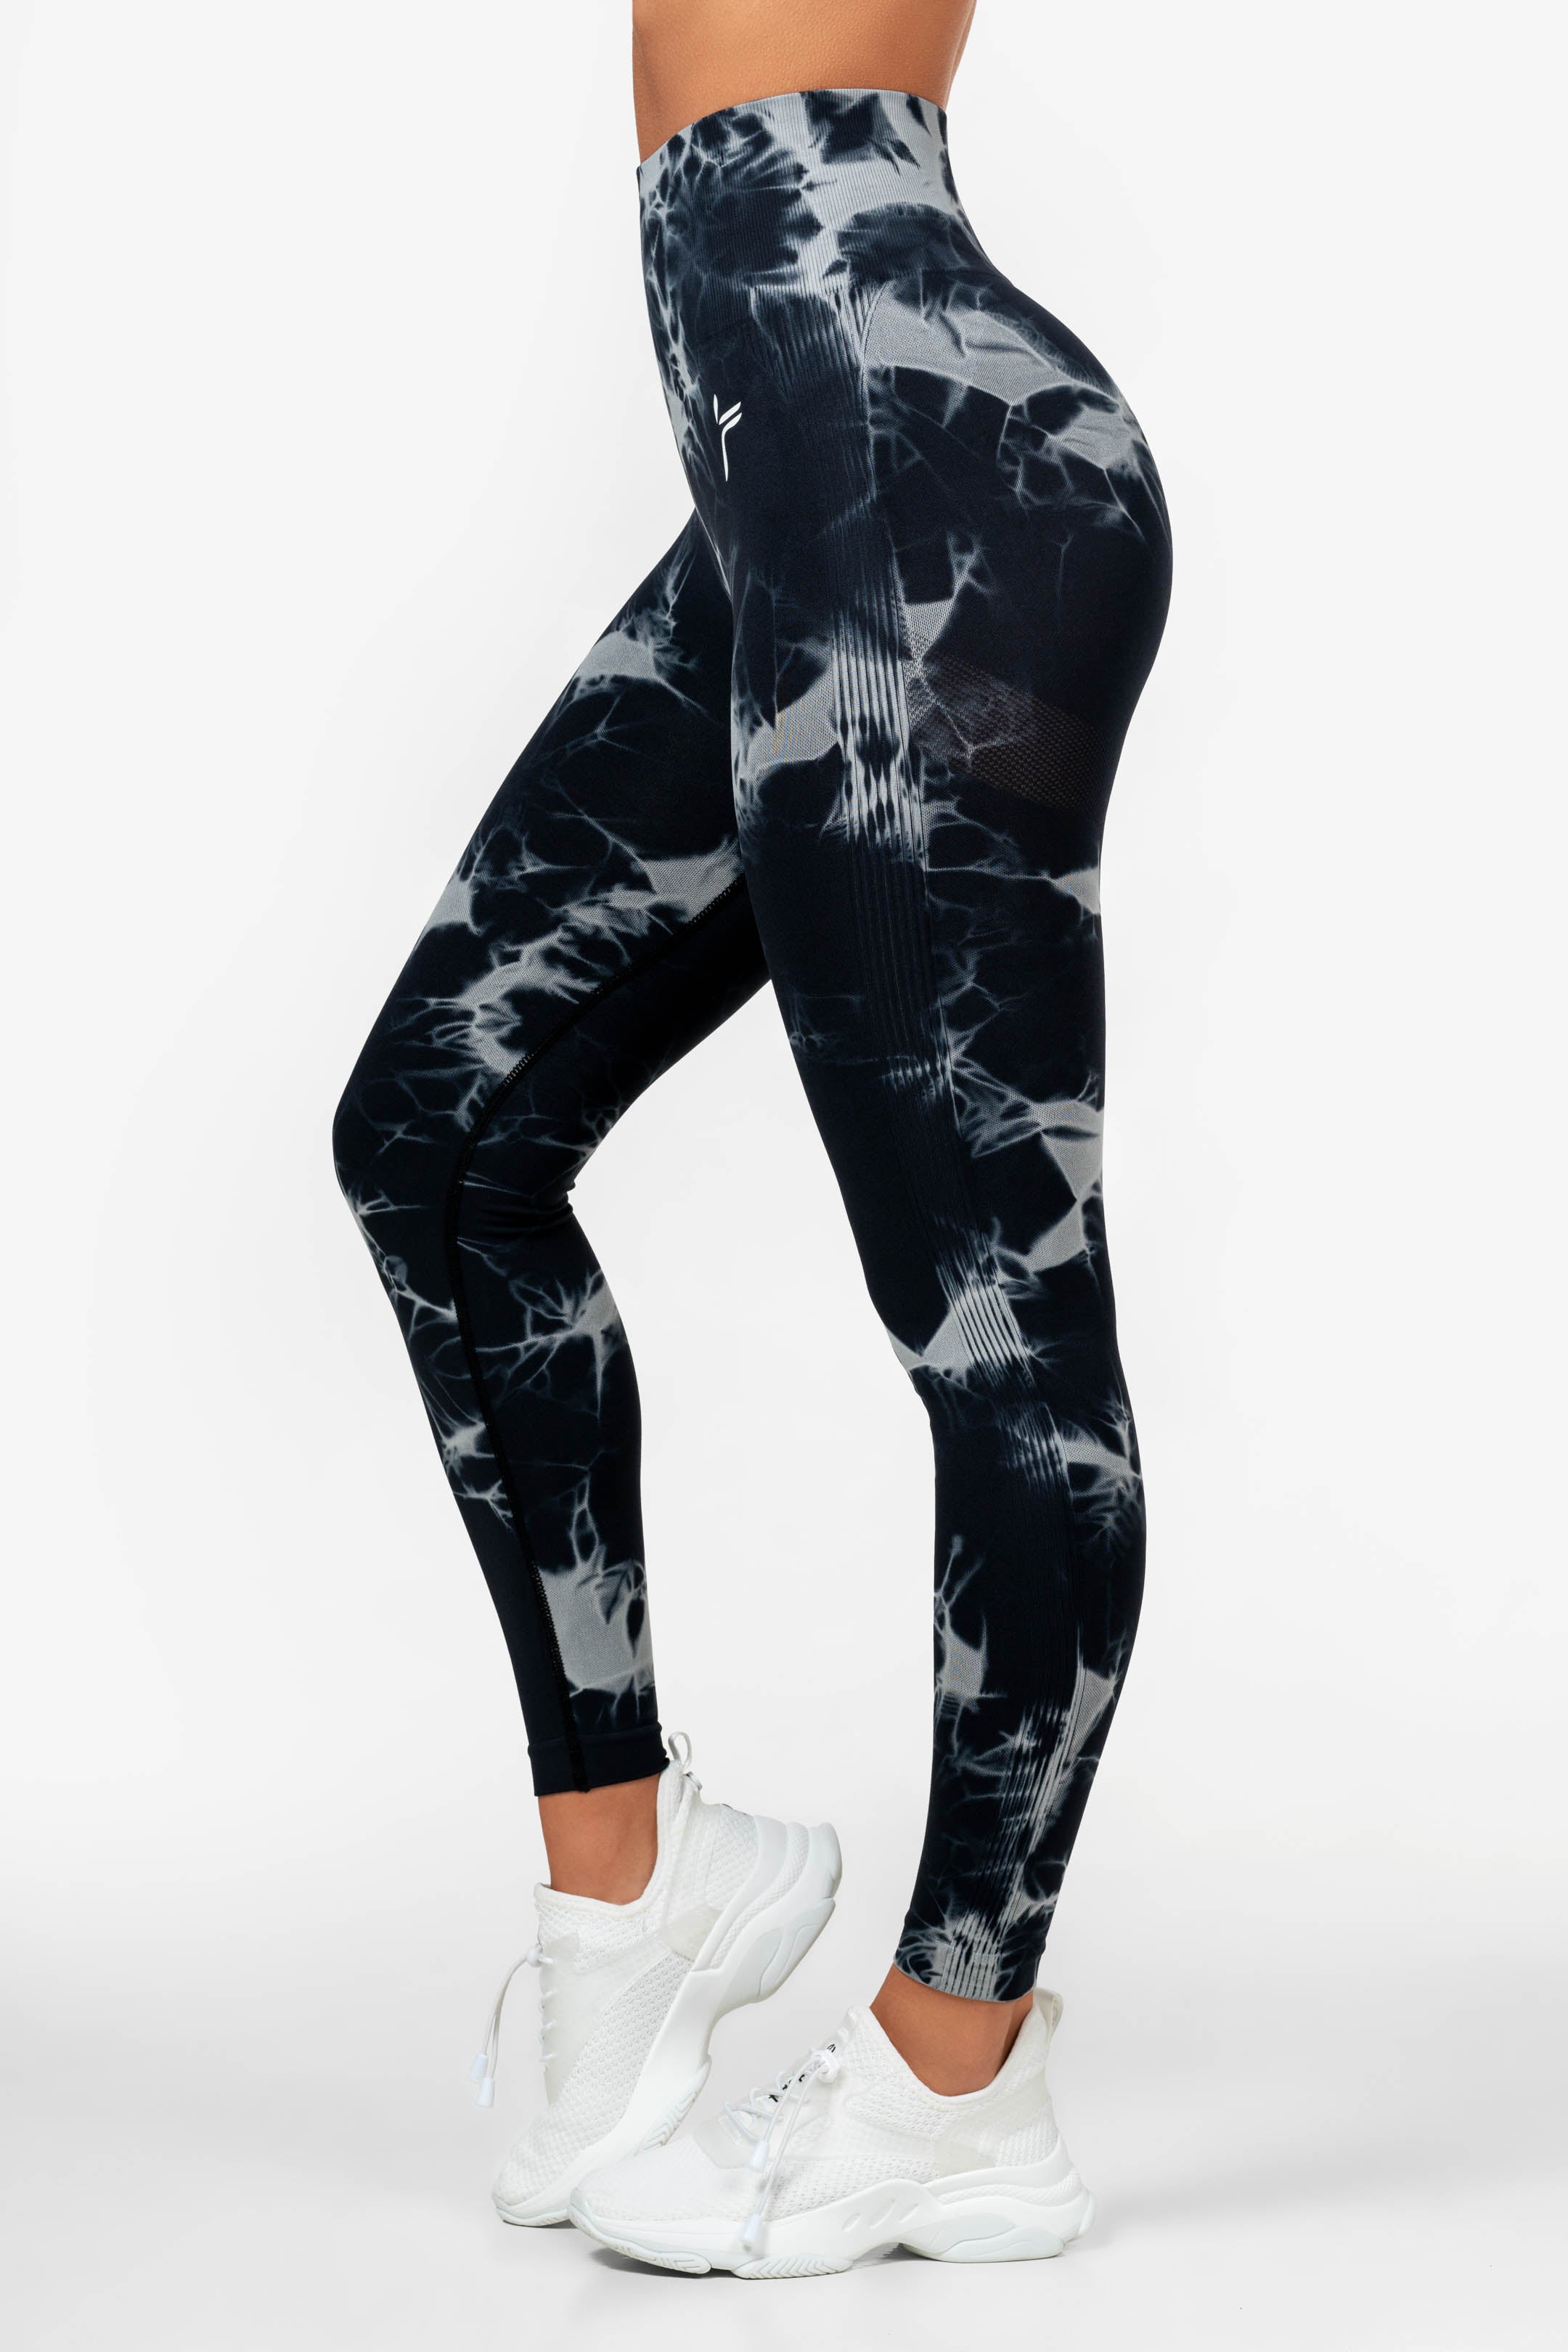 Women Tie-dyed High Waist Gym Exercise Sports Leggings,Black gray 